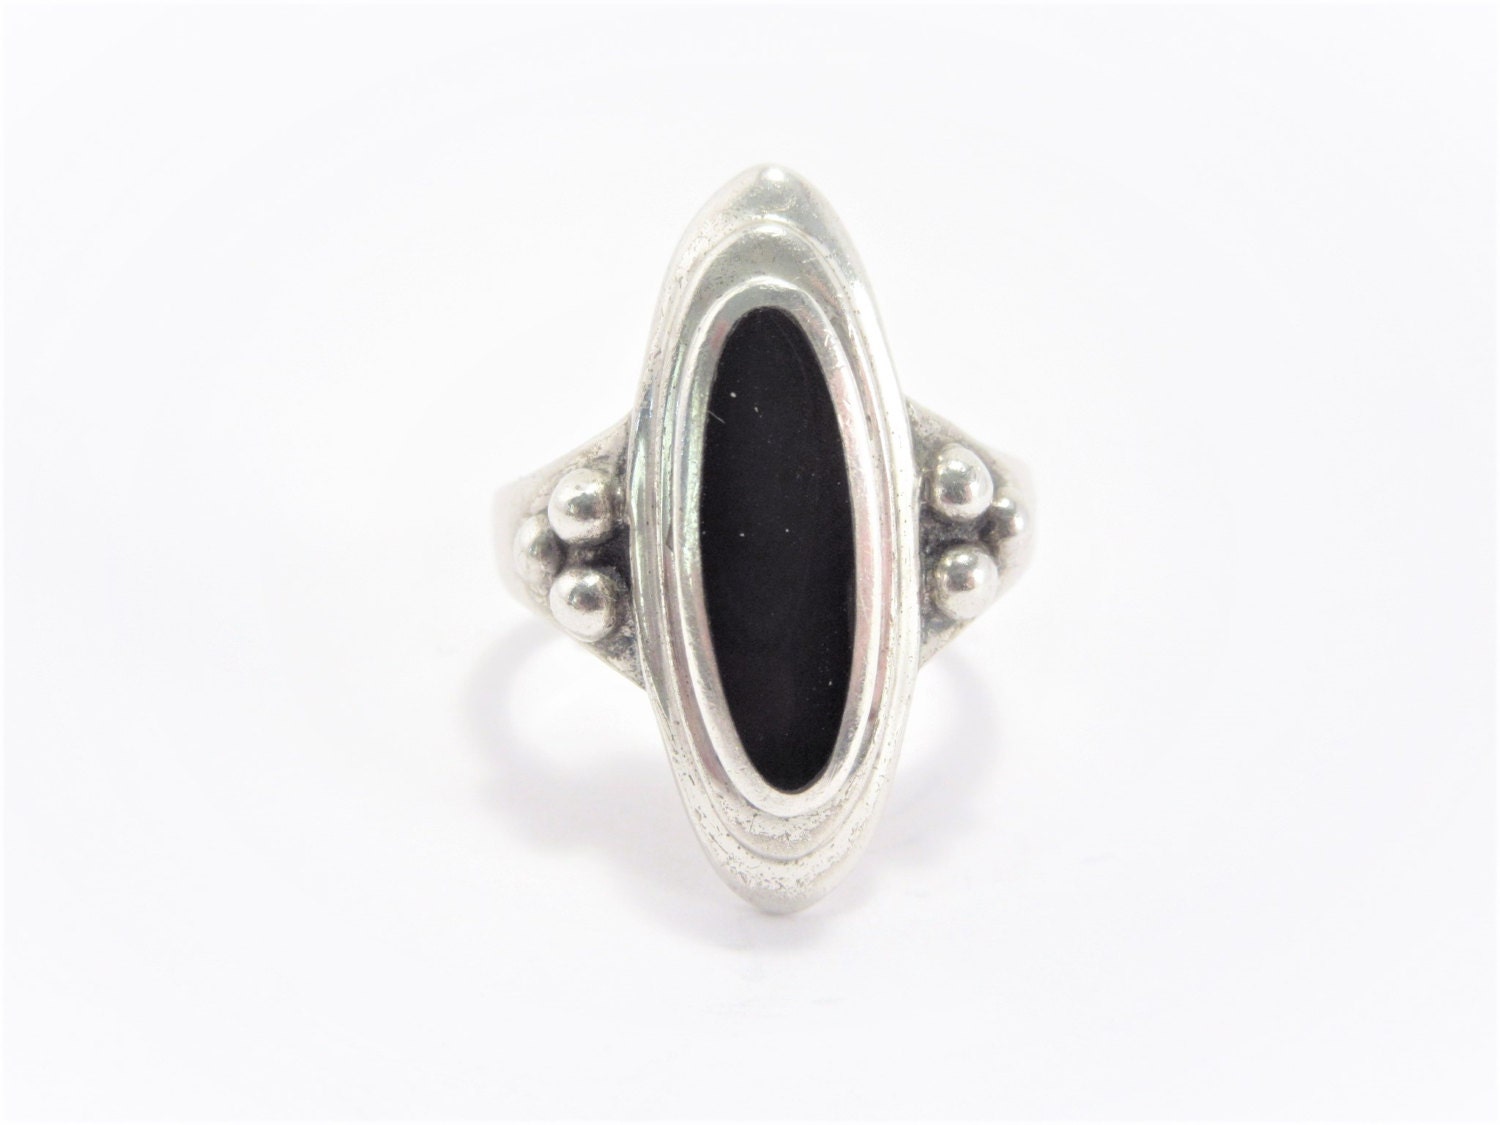 Vintage Oval Black Onyx Sterling Ring Size 7